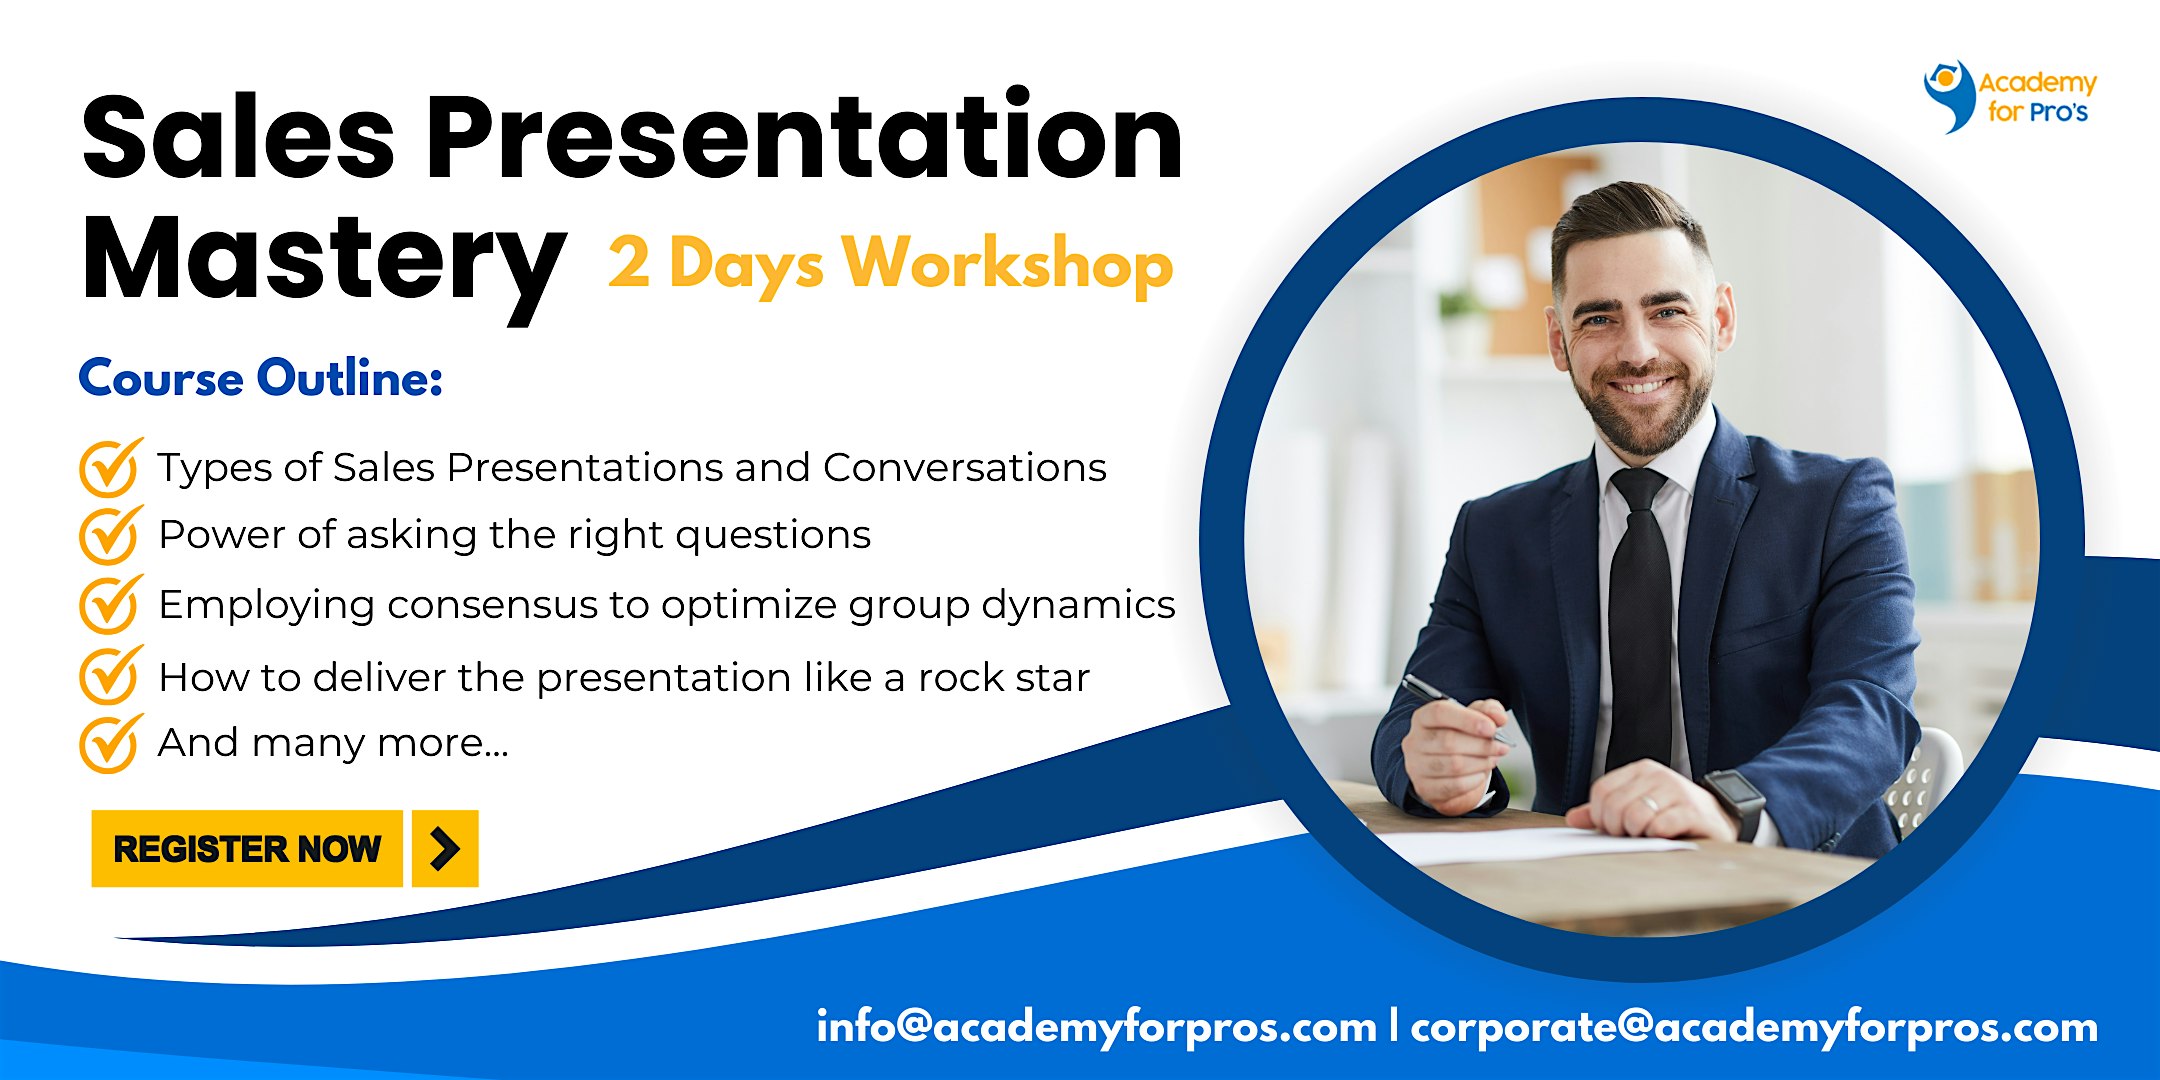 Sales Presentation Mastery 2 Days Workshop in Stamford, CT